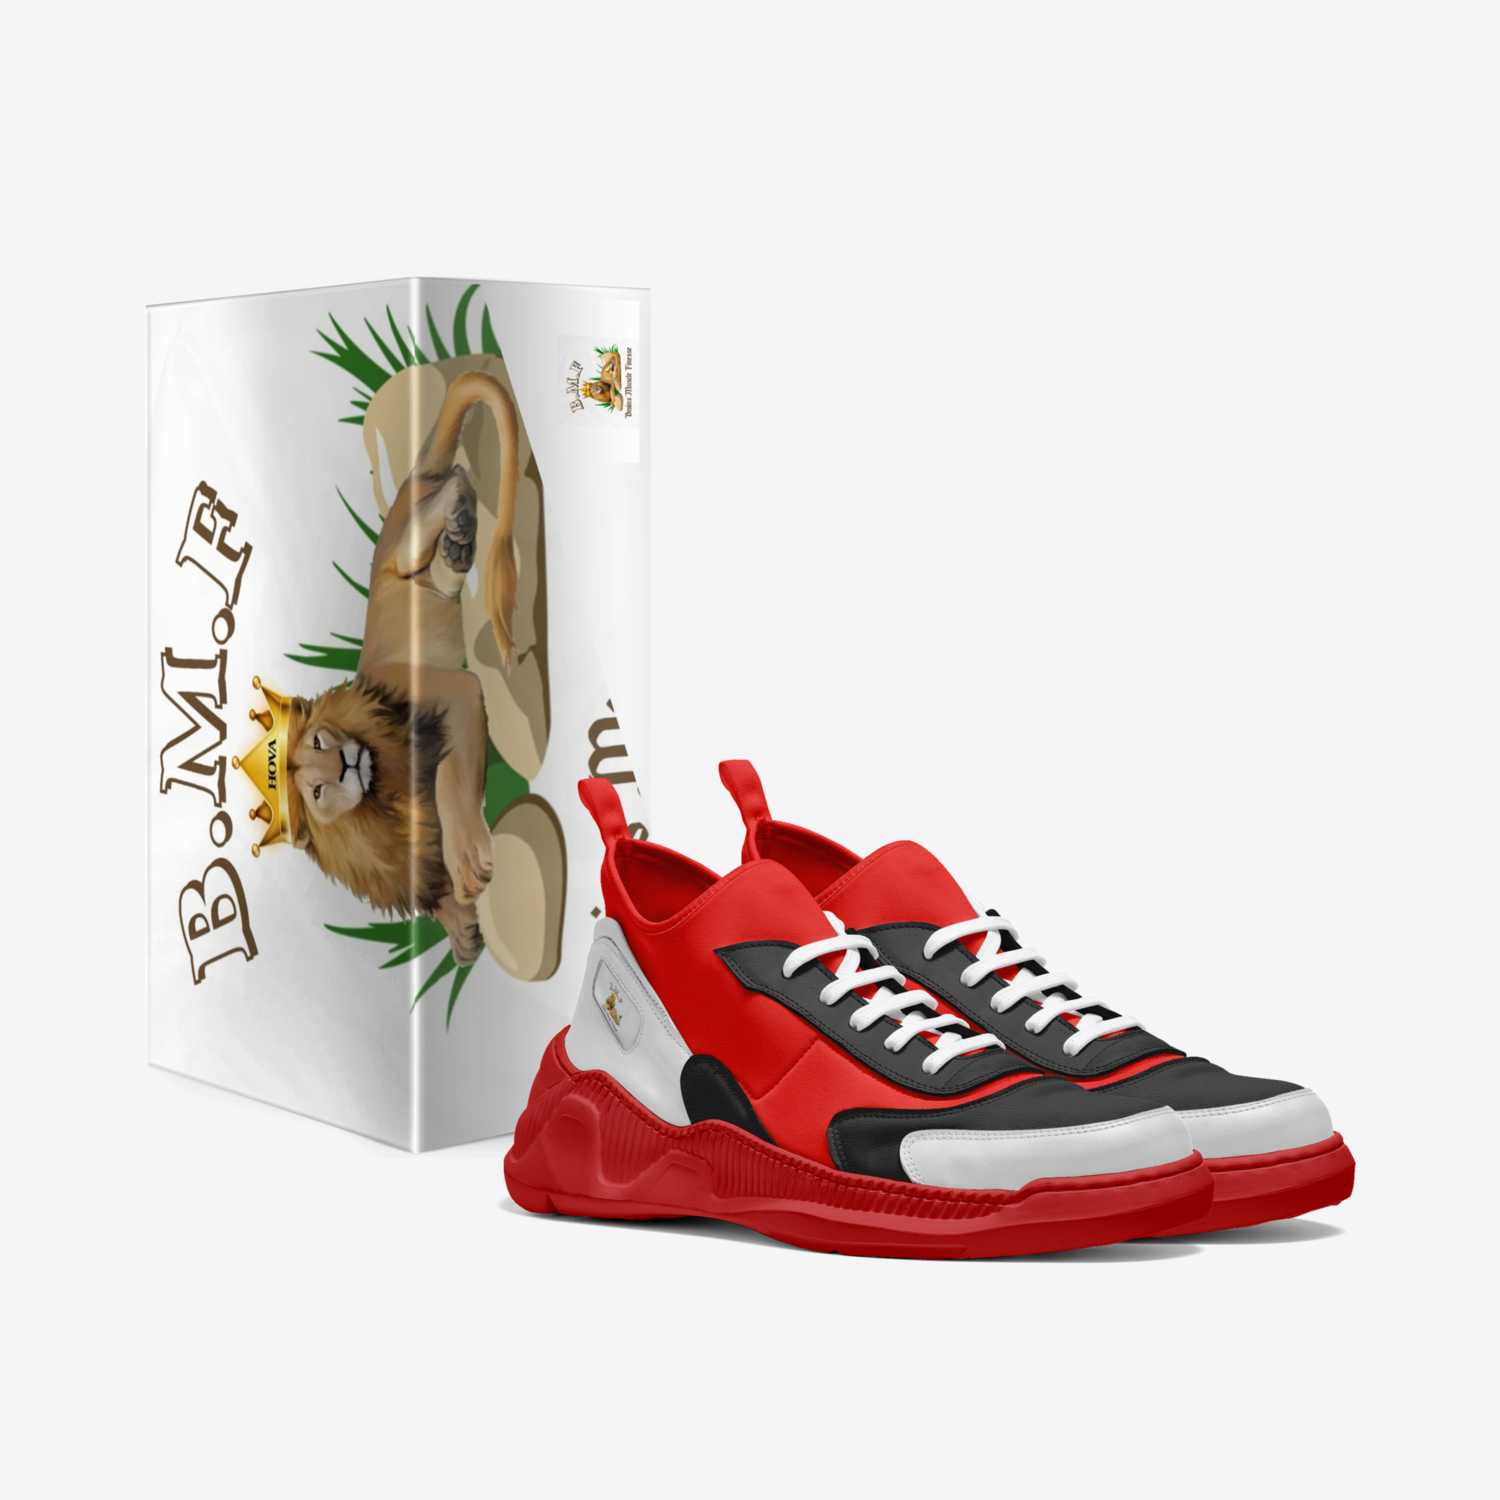 Hova4  custom made in Italy shoes by Jermaine Zeno | Box view